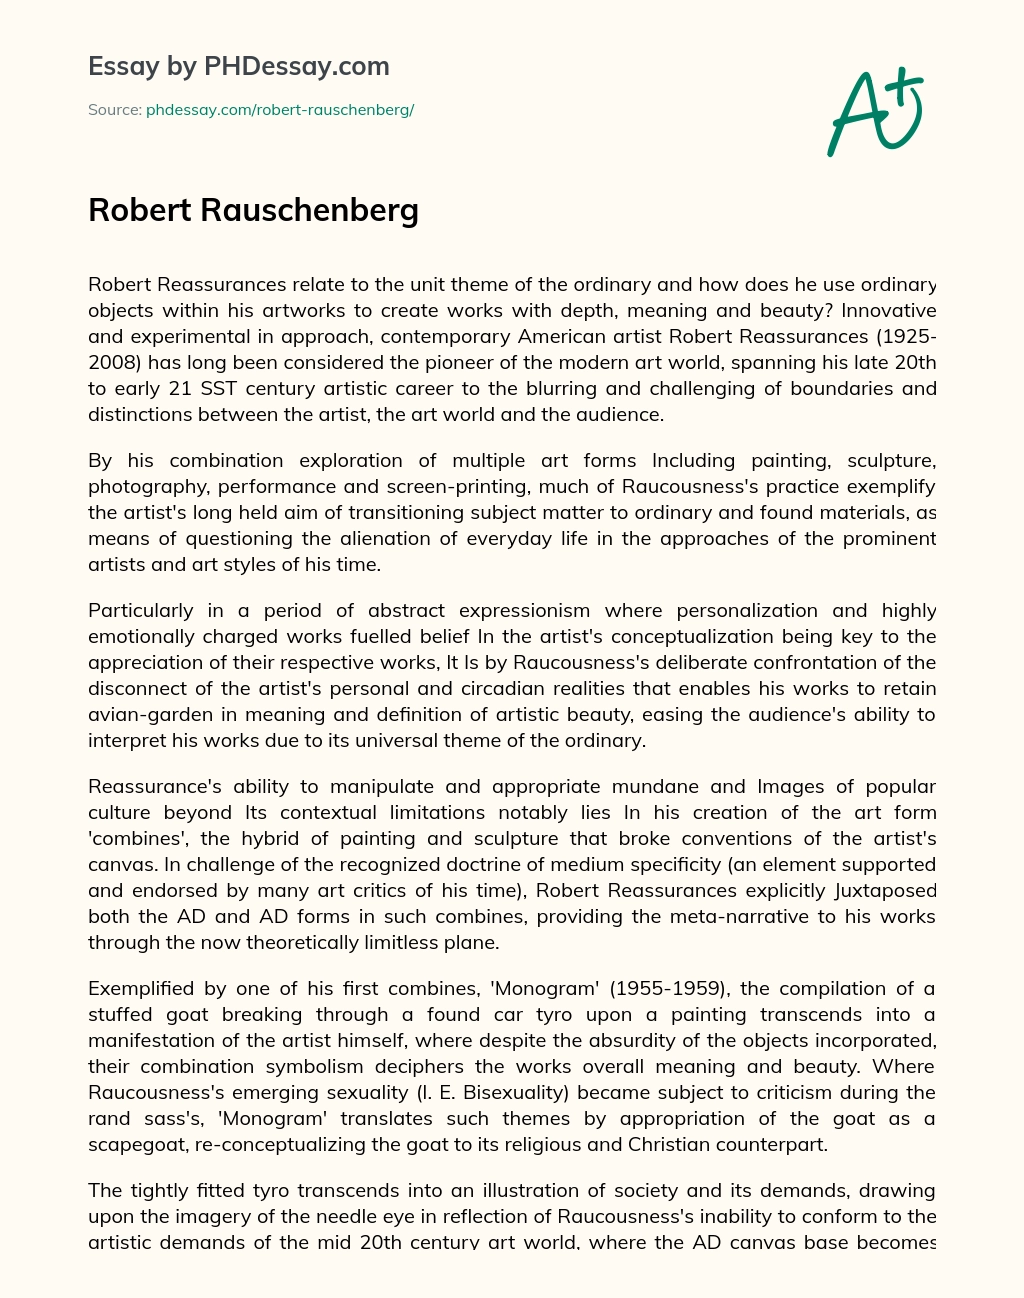 Robert Rauschenberg essay